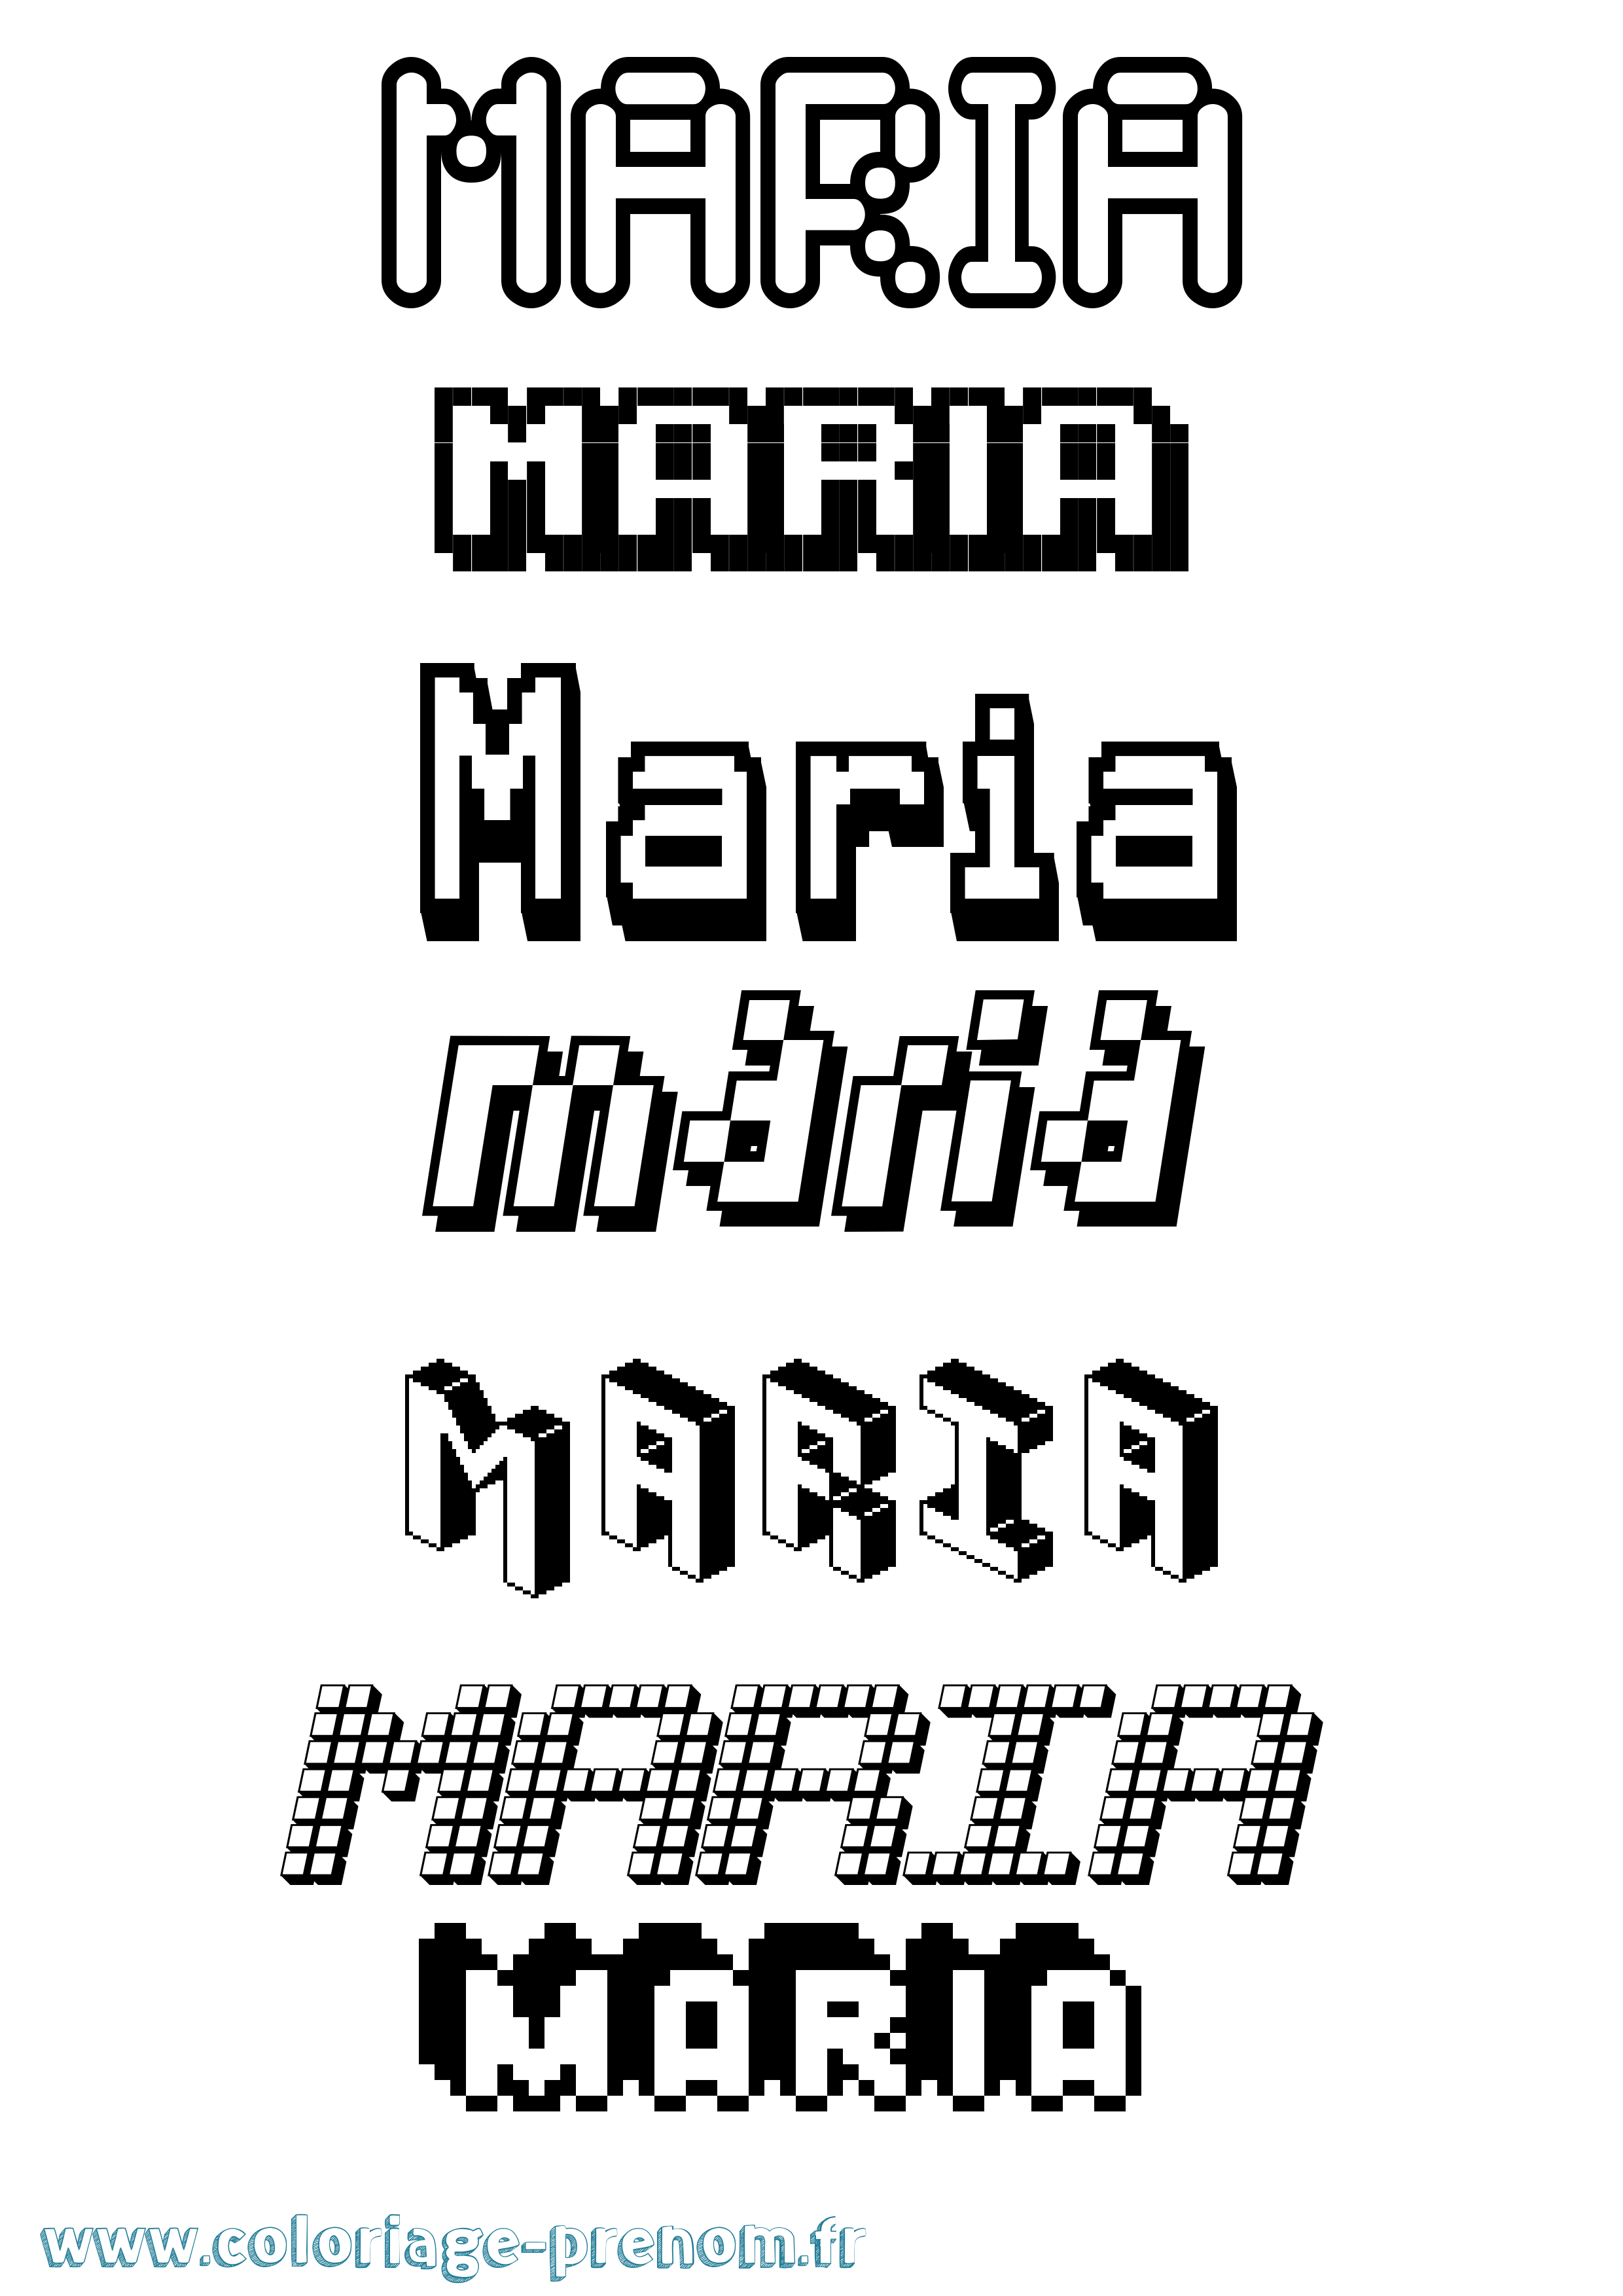 Coloriage prénom Maria Pixel